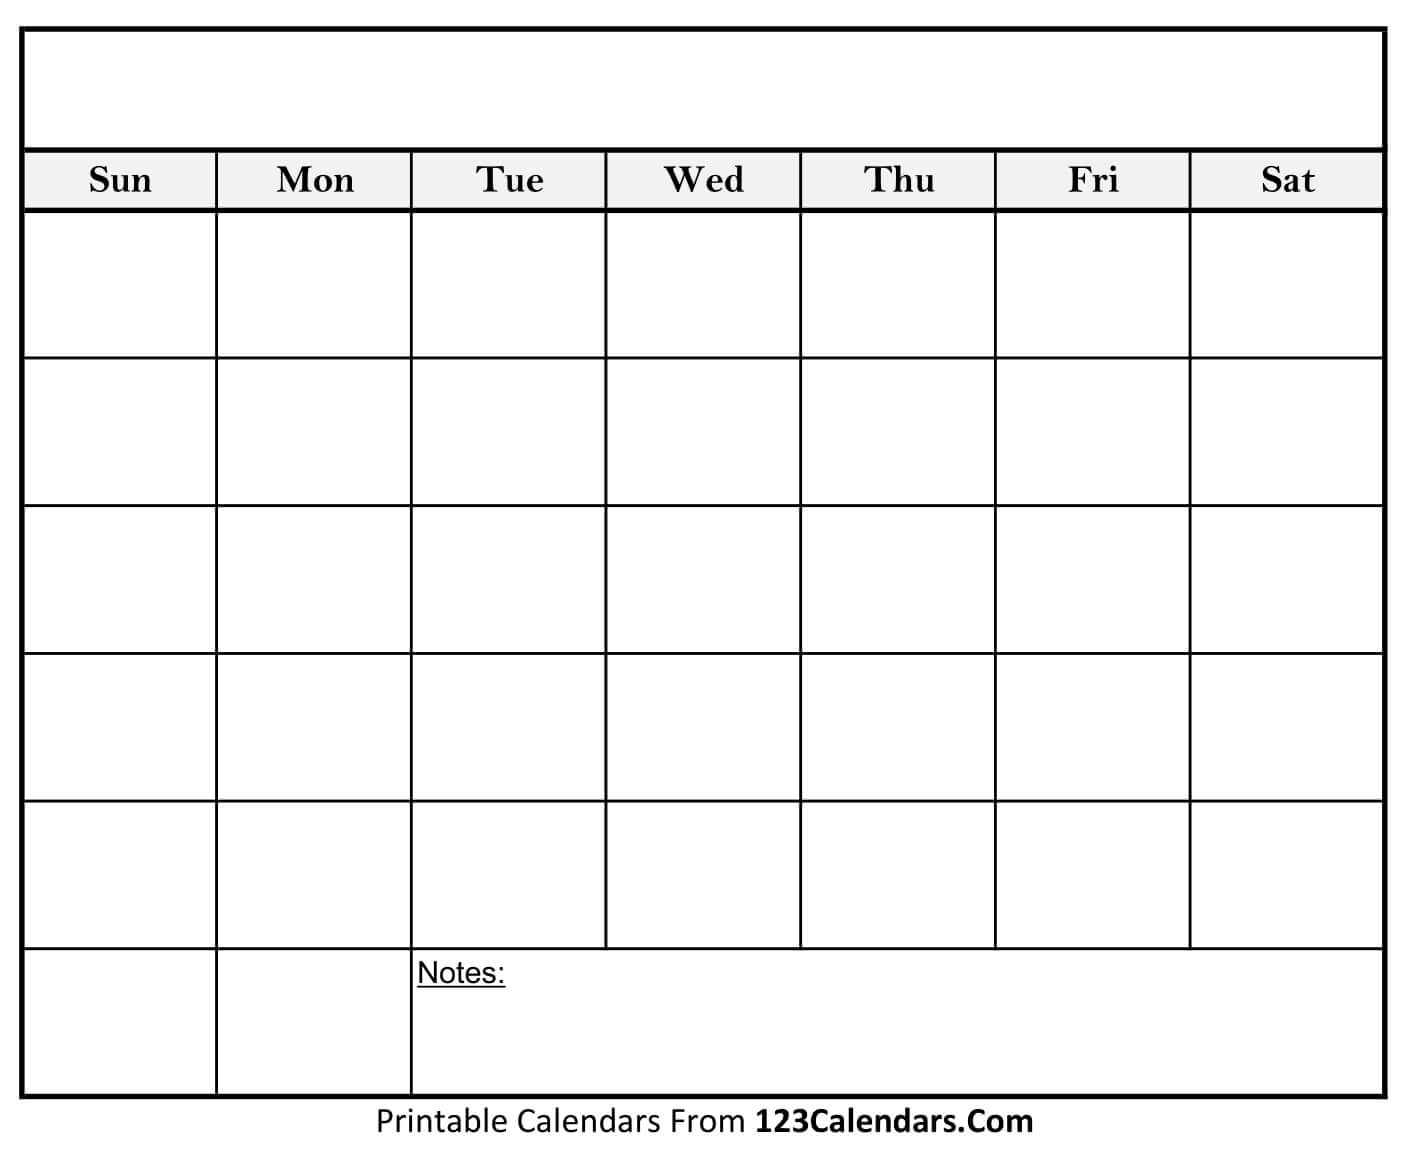 Free Printable Blank Calendar | 123Calendars Pertaining To Blank Calender Template